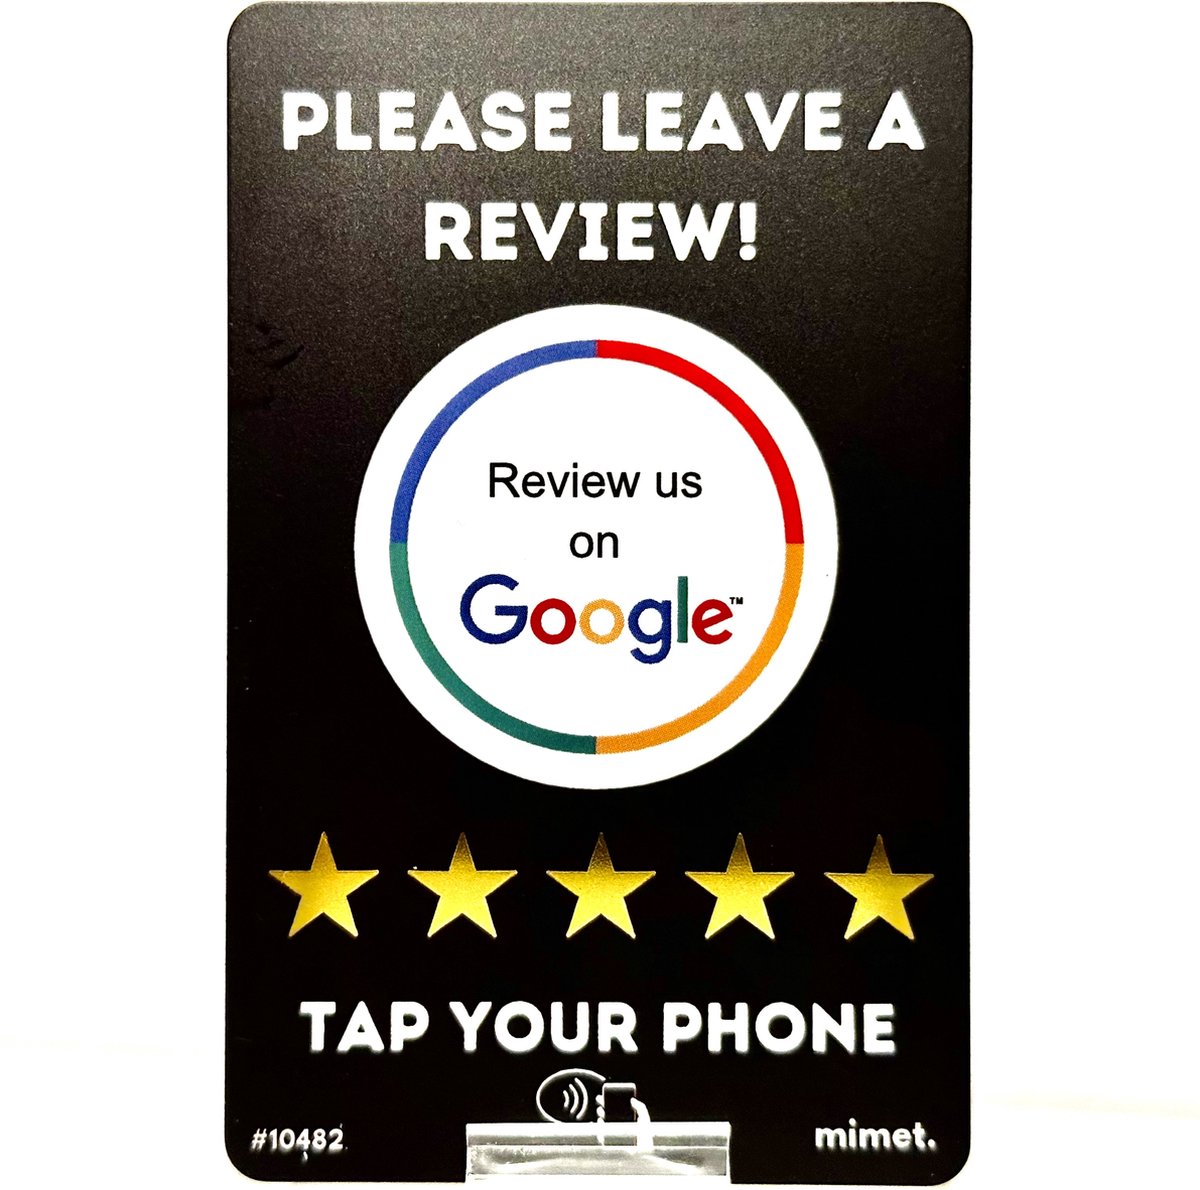 PREMIUM - Google NFC Review card - NFC - Tap to phone recensie kaart - Boost je reviews!